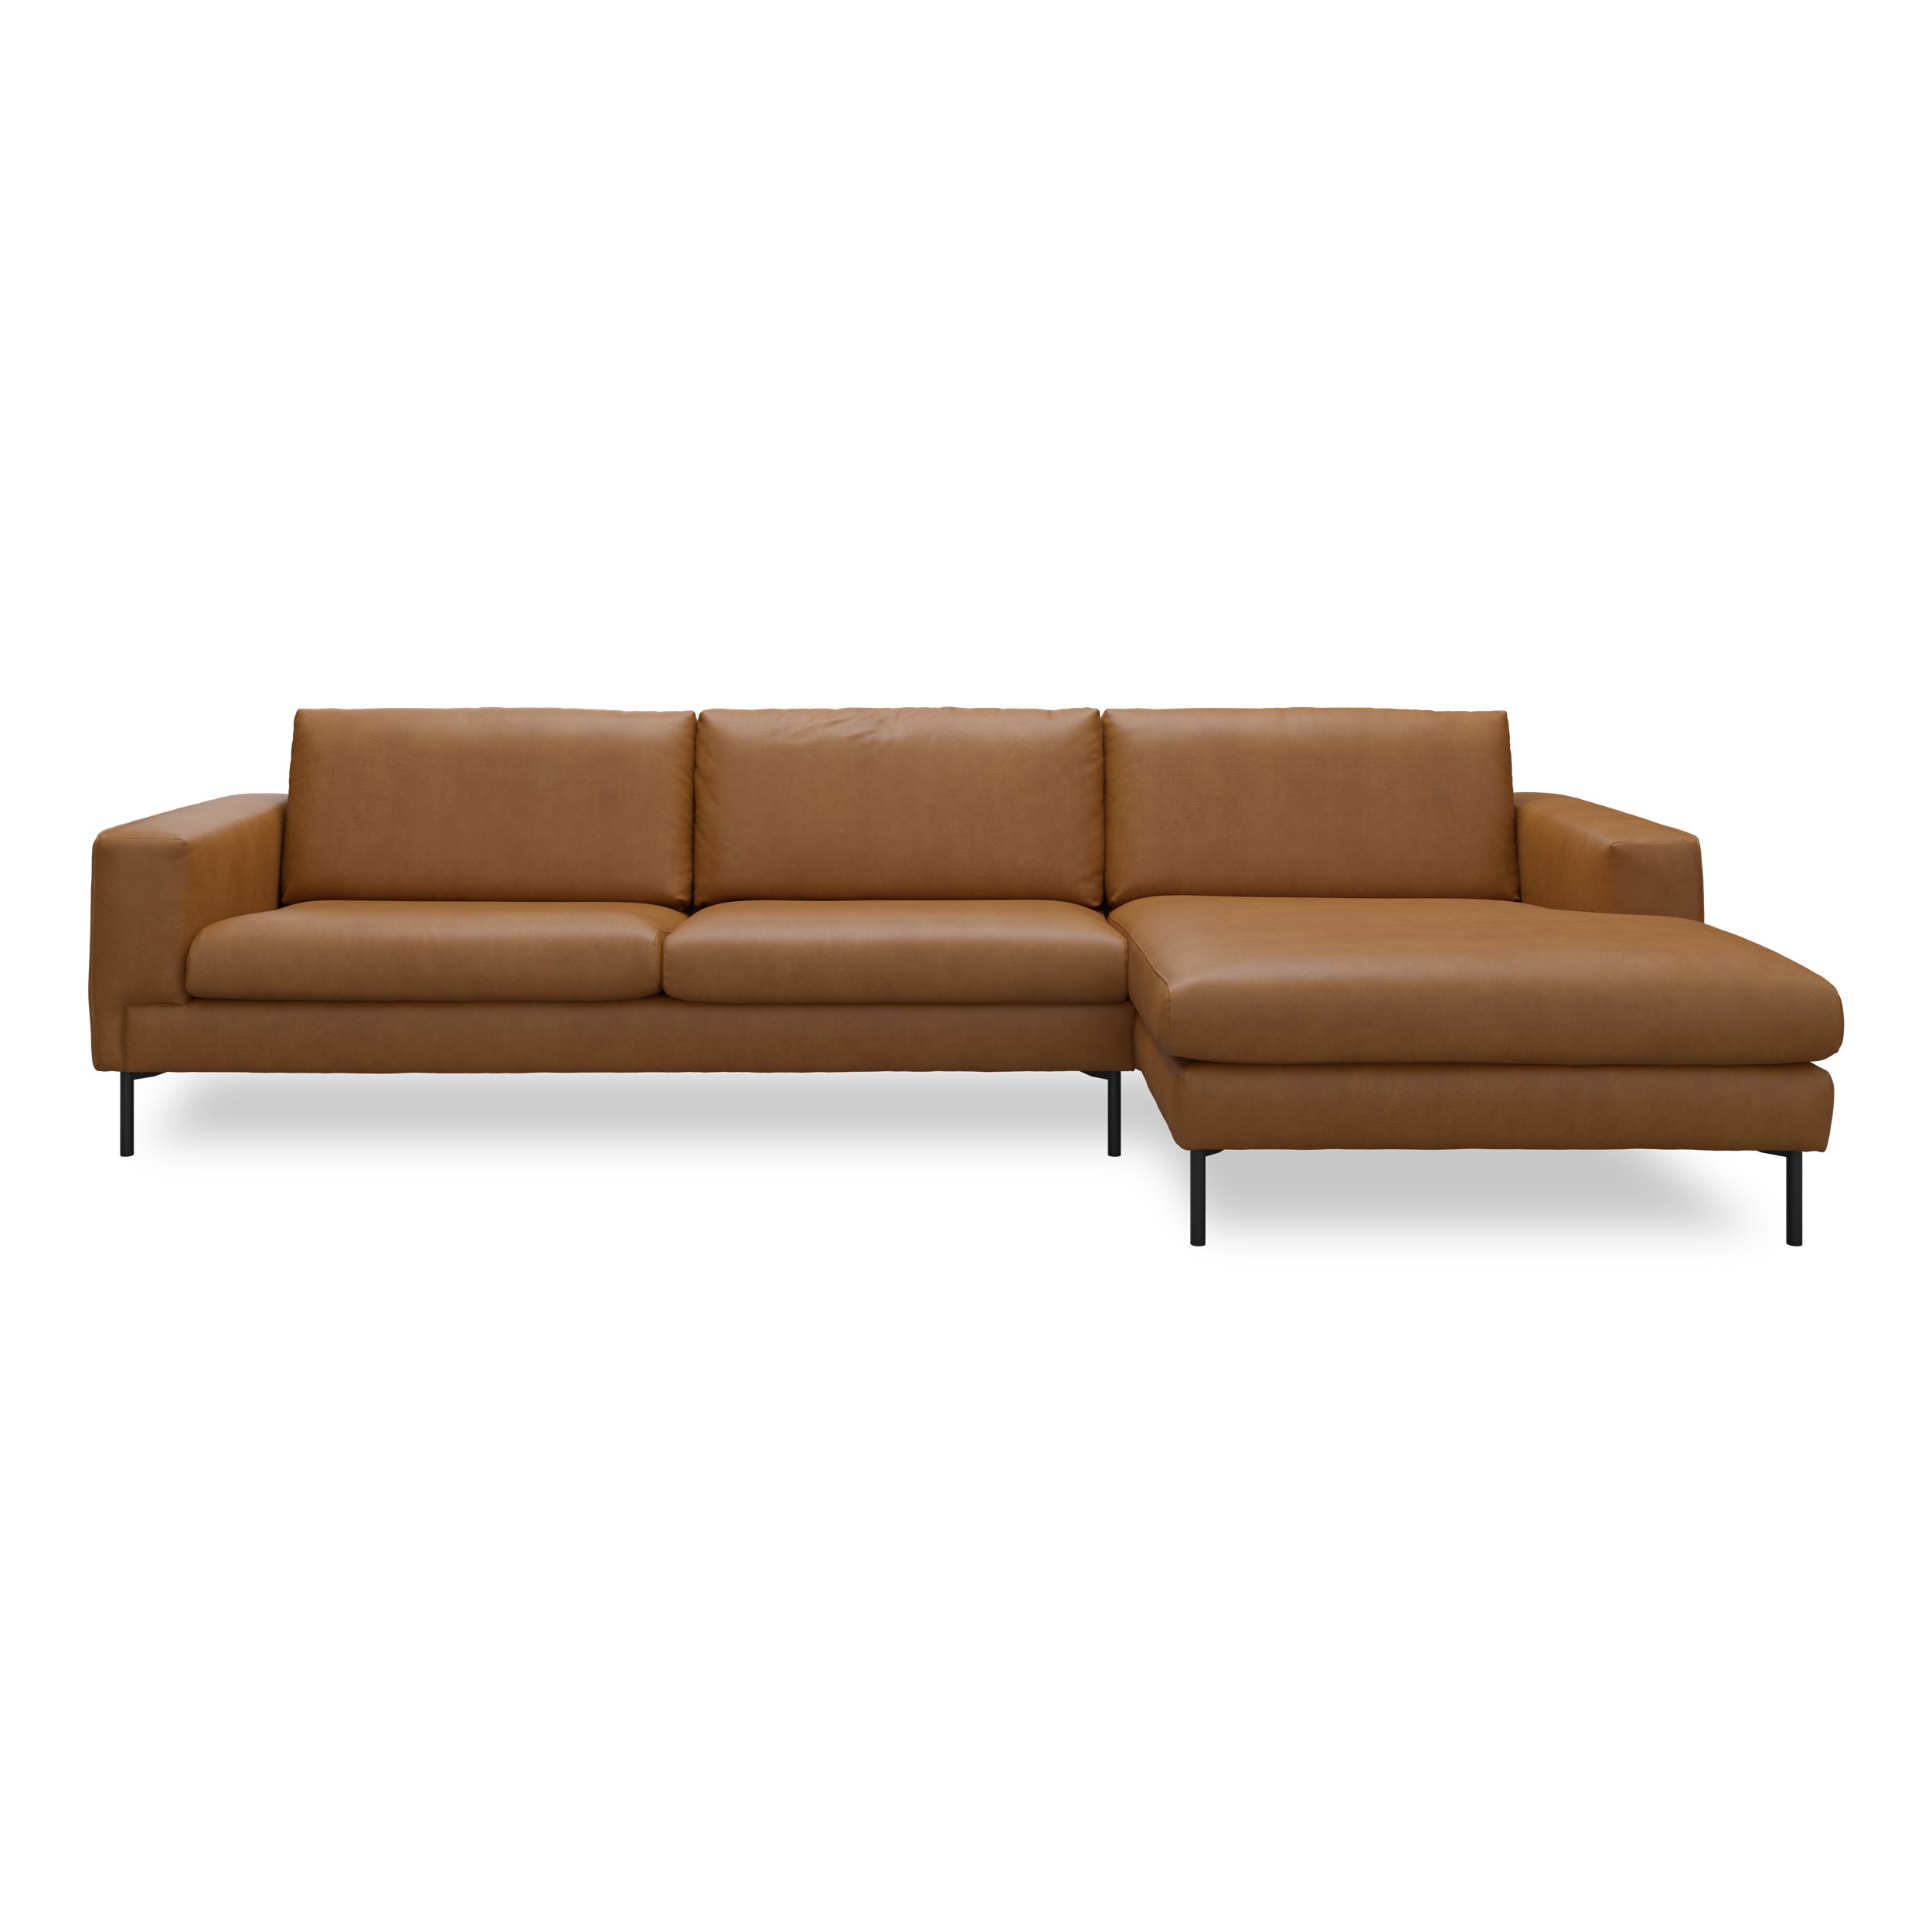 Nyland højrevendt sofa med chaiselong - Kentucky 9 cognac bonded læder, Ben no. 145 i sortlakeret metal og S: Koldskum R:Koldskum med fiberfyld